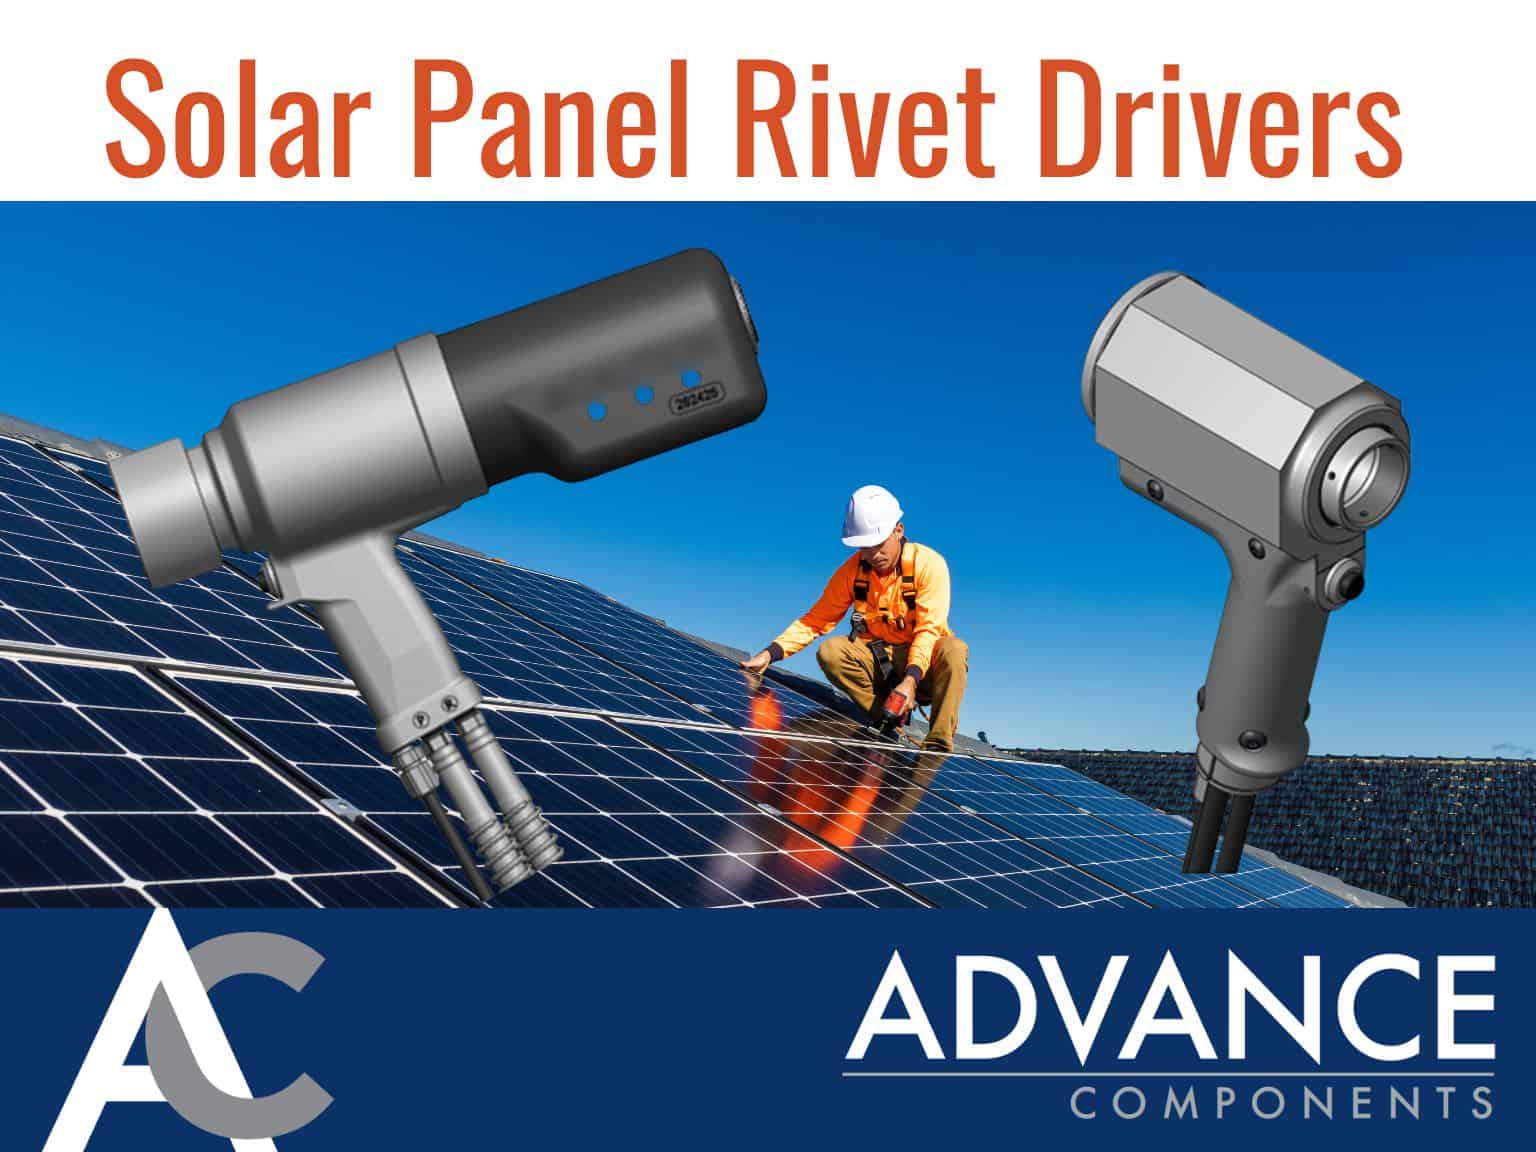 Solar panel rivet drivers